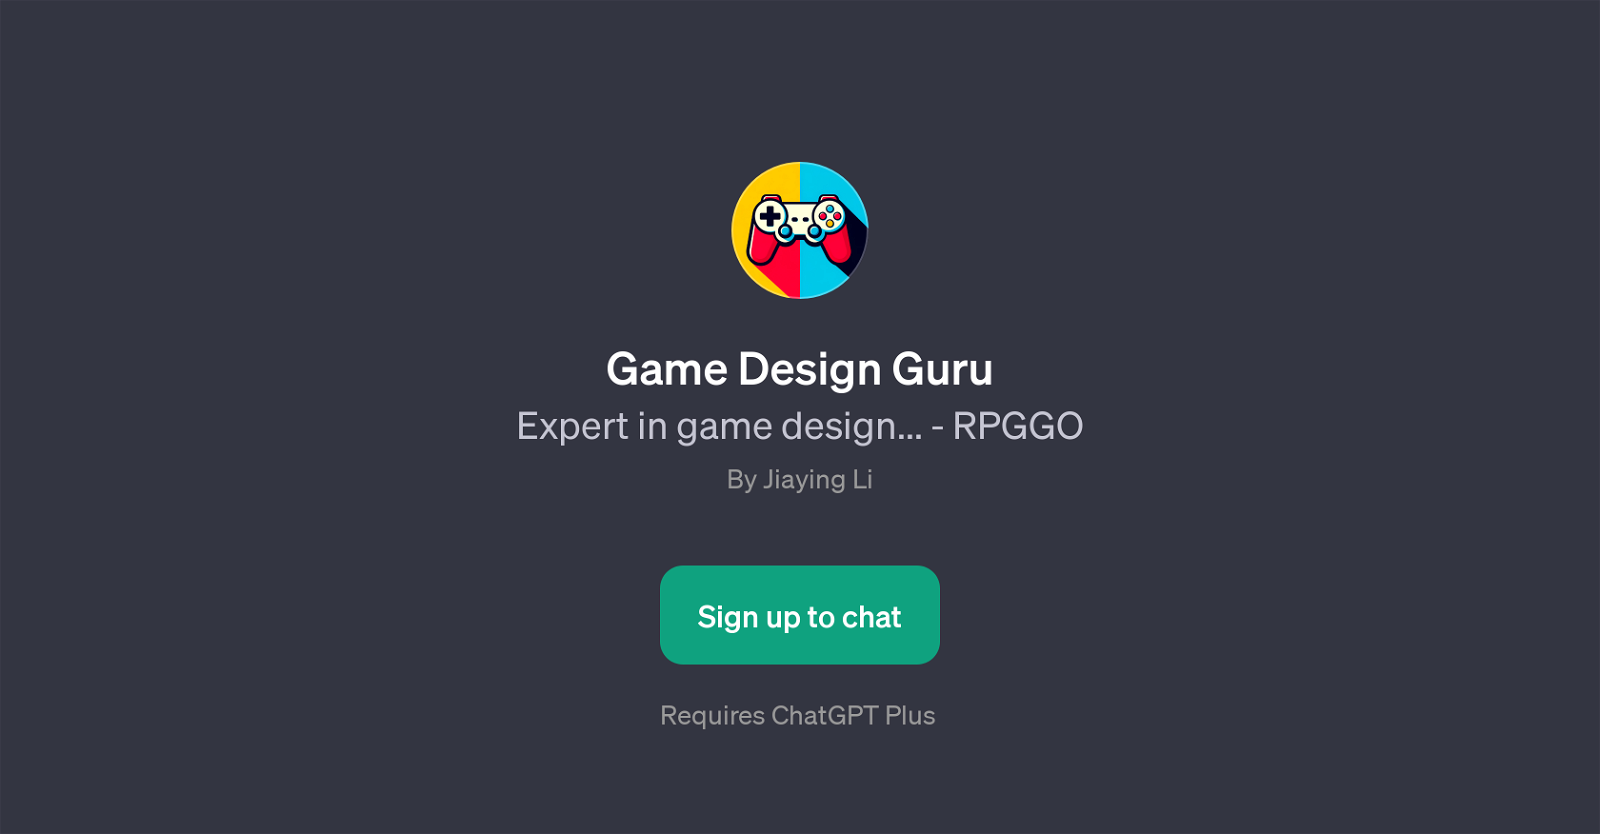 Game Design Guru website